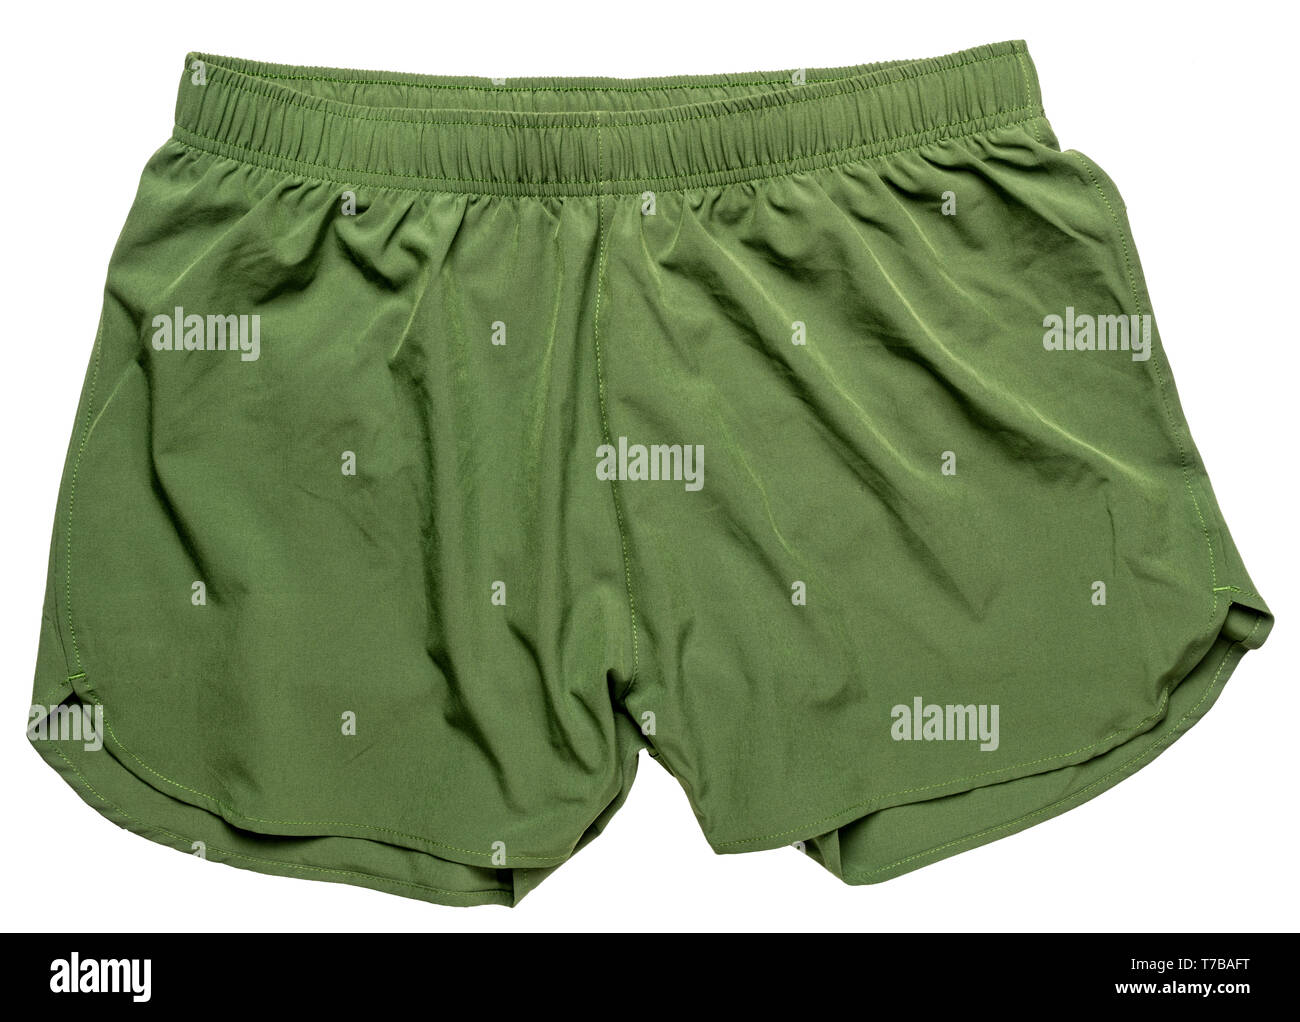 men's green running shorts isolated on white Stock Photo